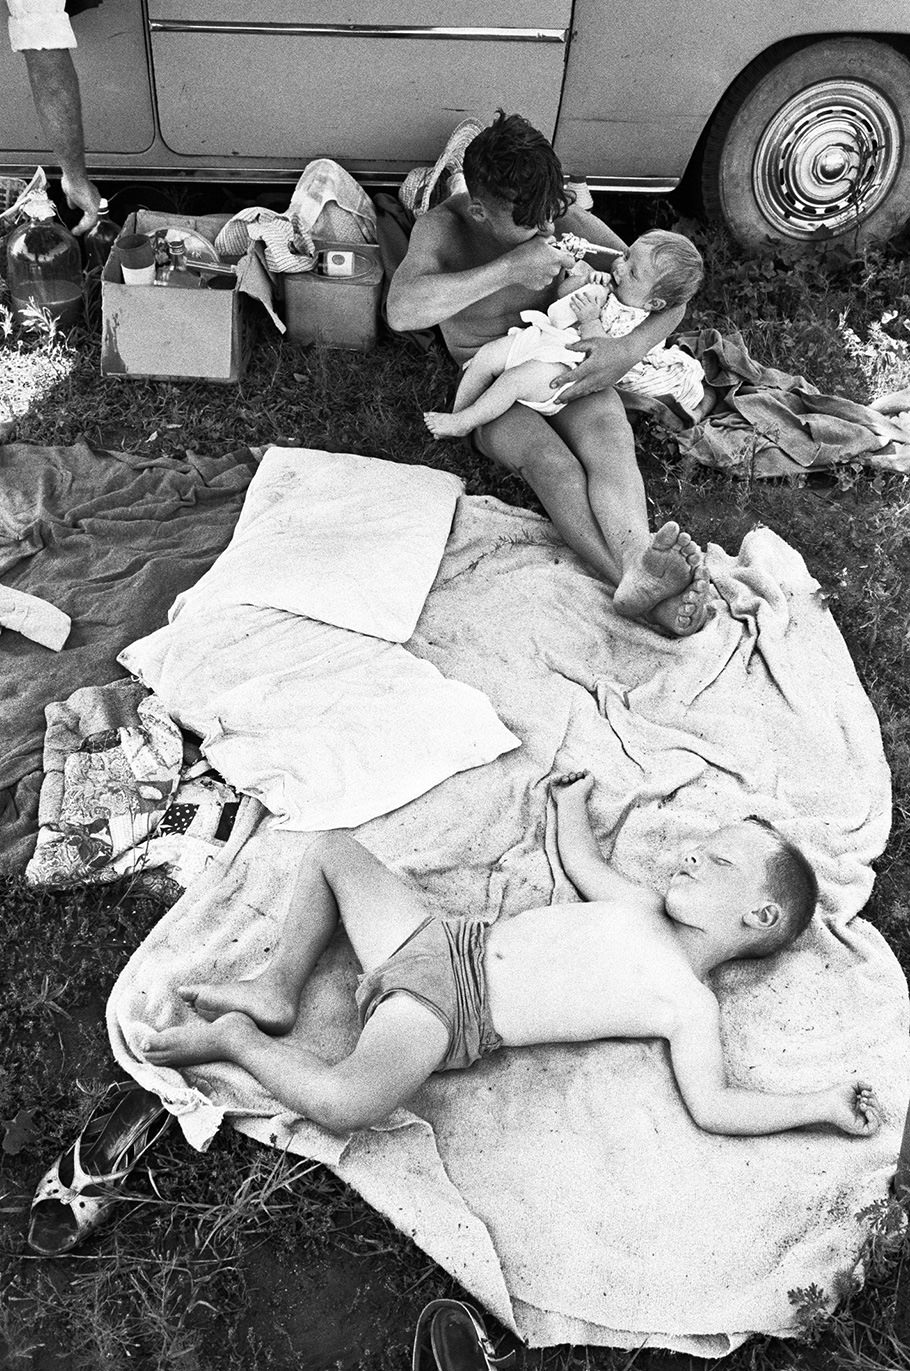 David Goldblatt black and white photo of young children outside.